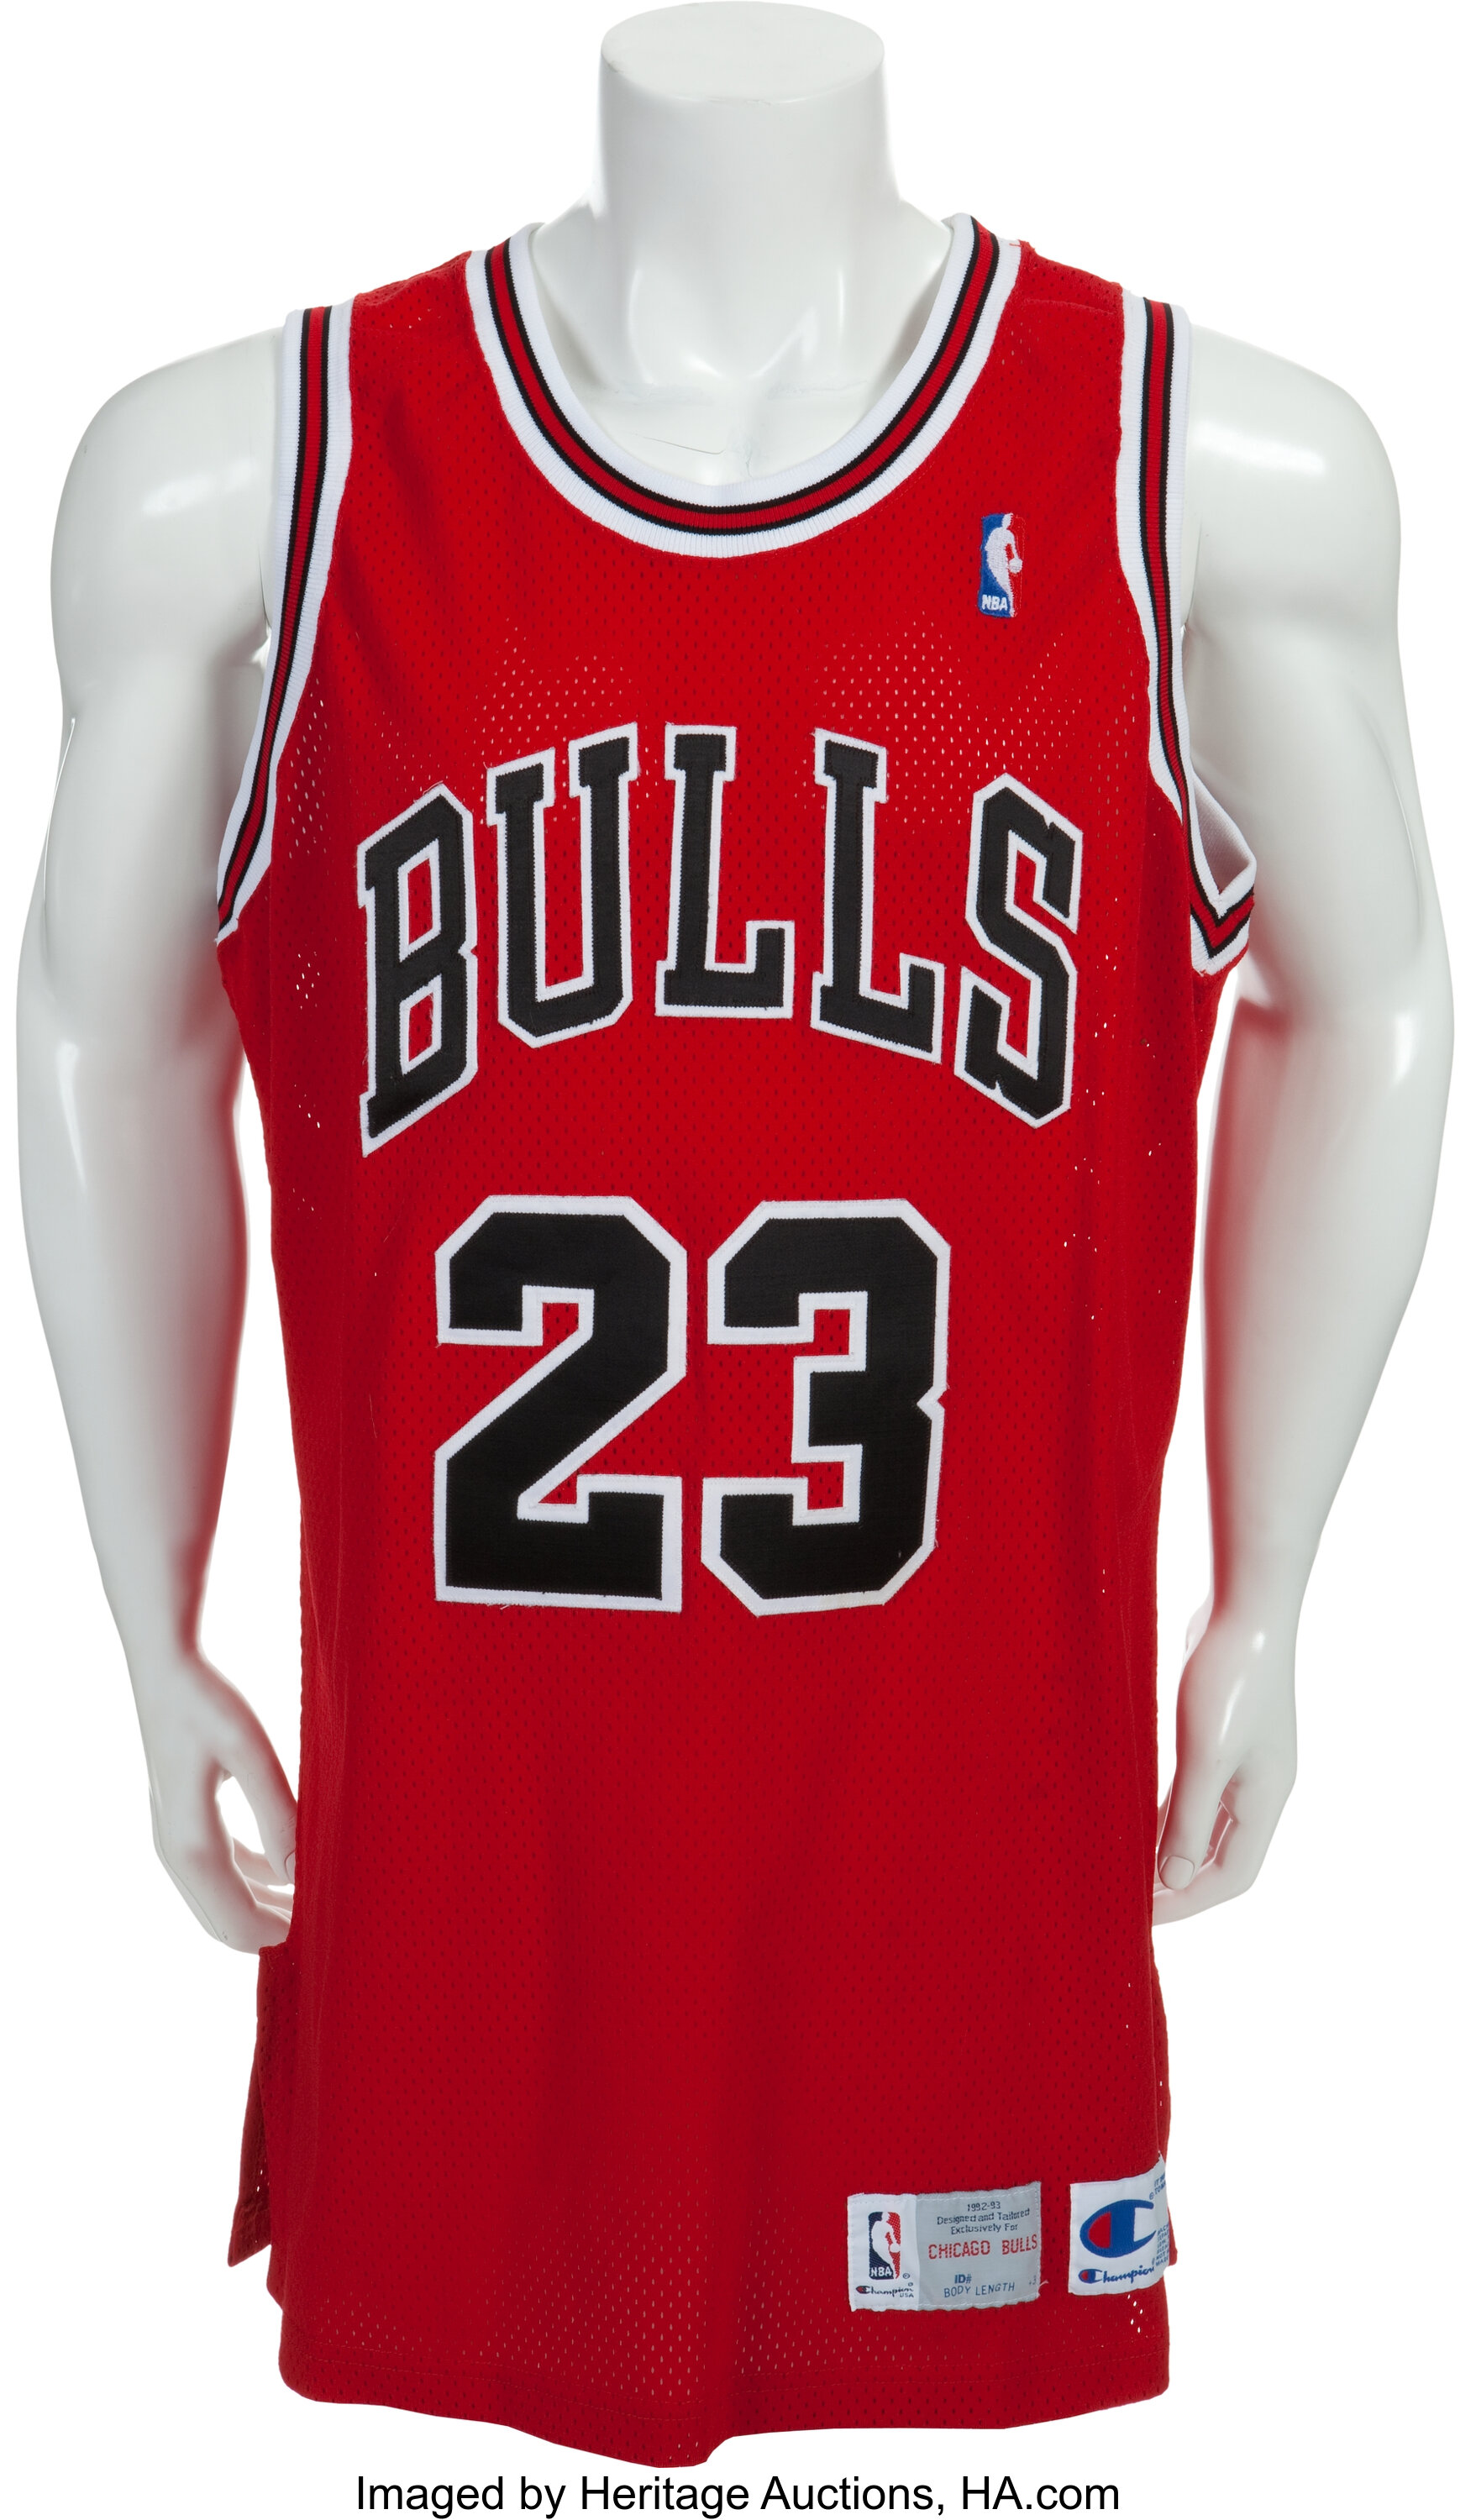 Michael Jordan 1992-93 Chicago Bulls Game-Used & Signed Jersey